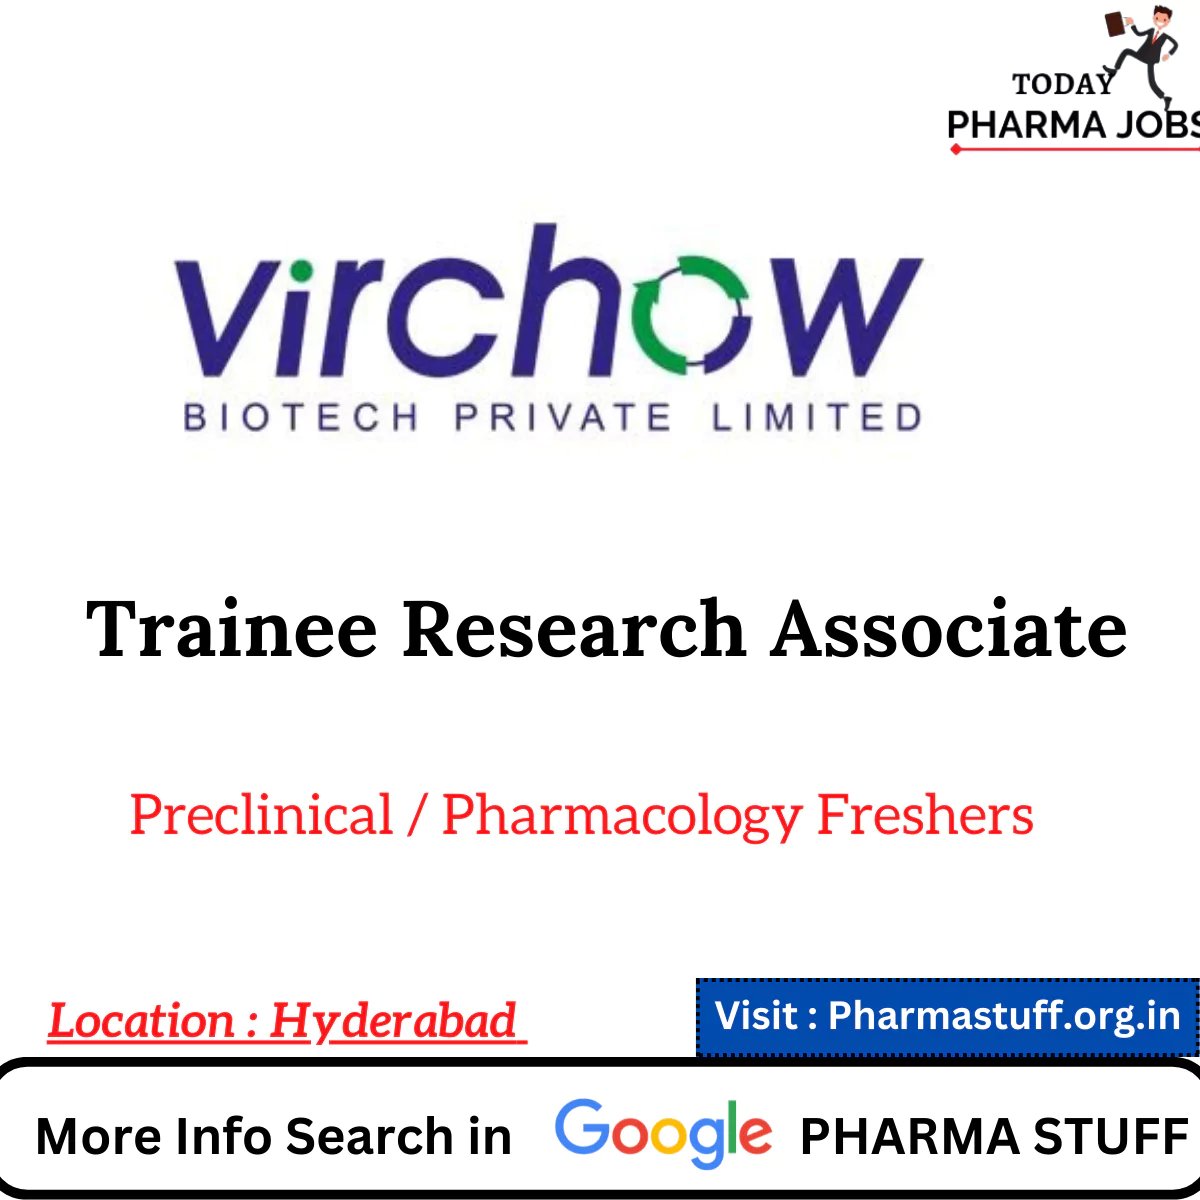 %titl virchow biotech fresher job vacancies1189369699303044151